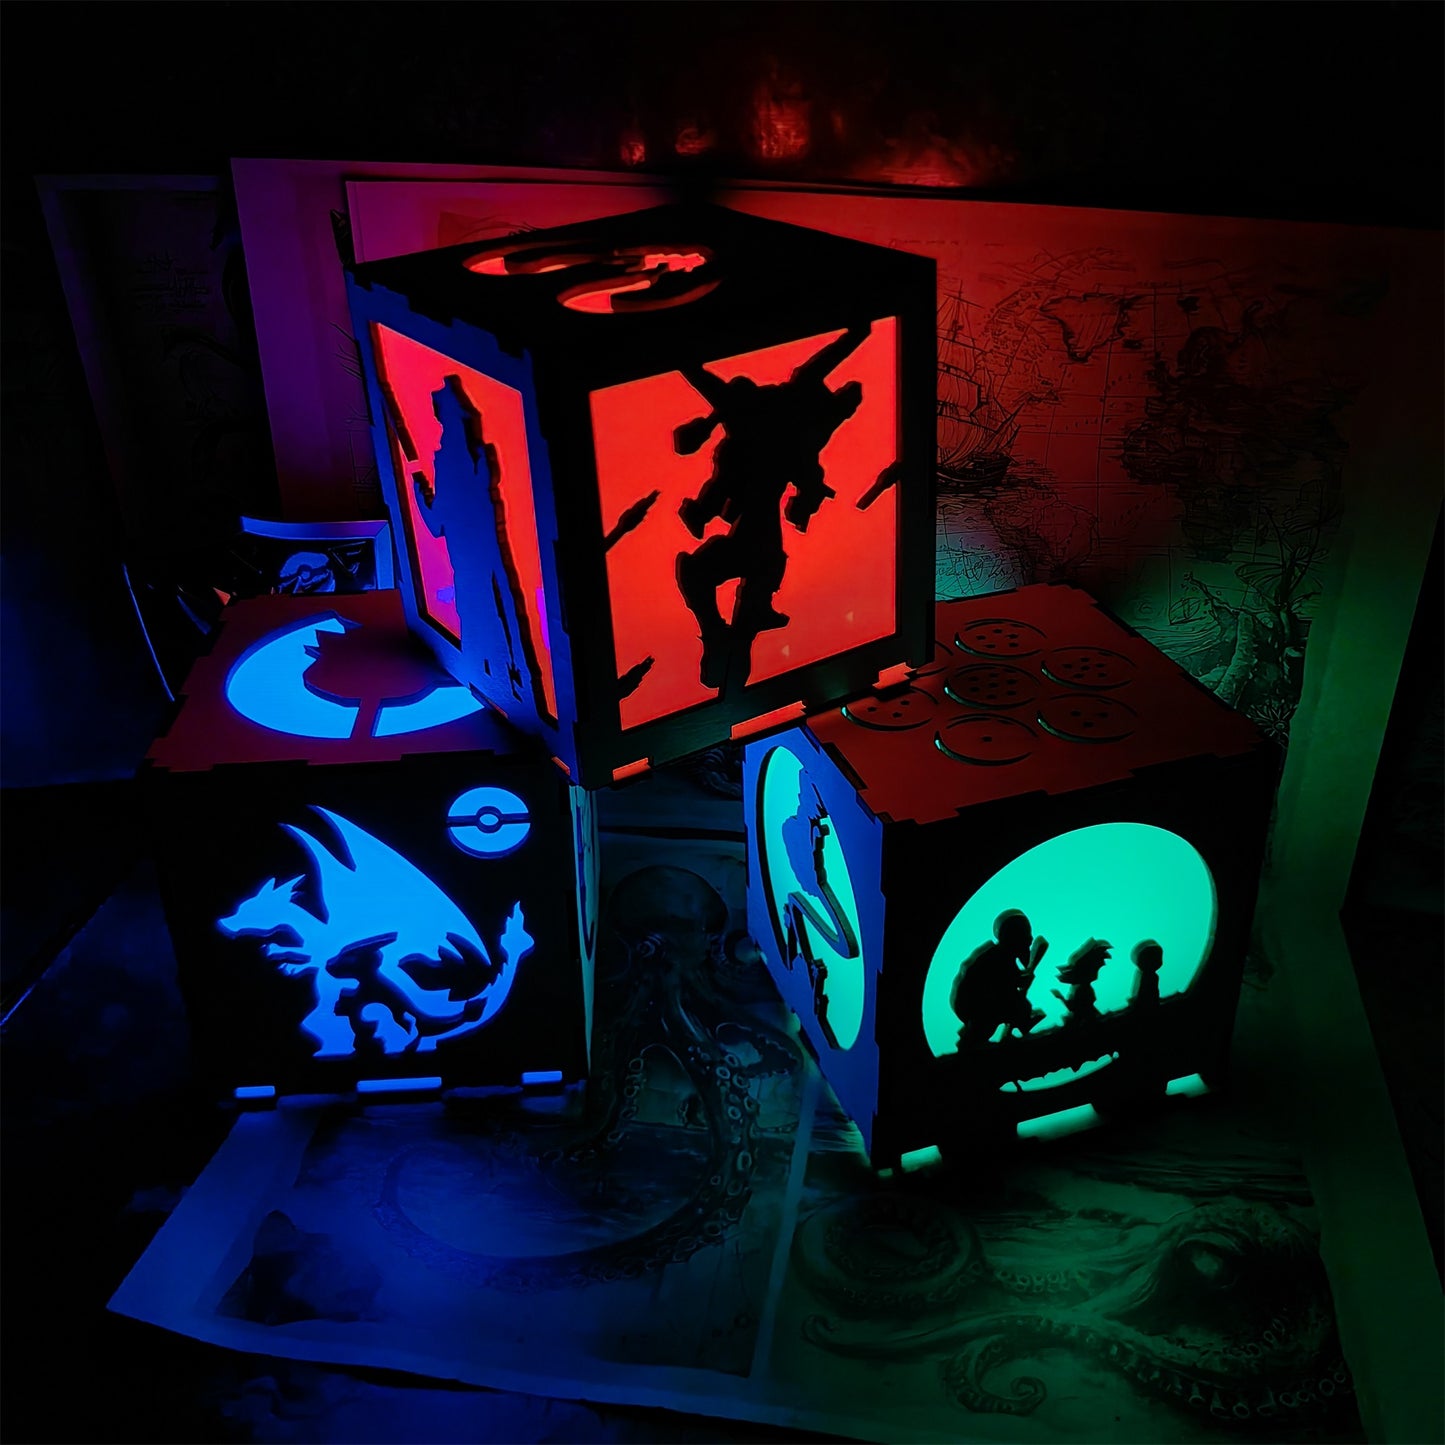 Octane Valkyrie Wood Cube Light Desk Decor